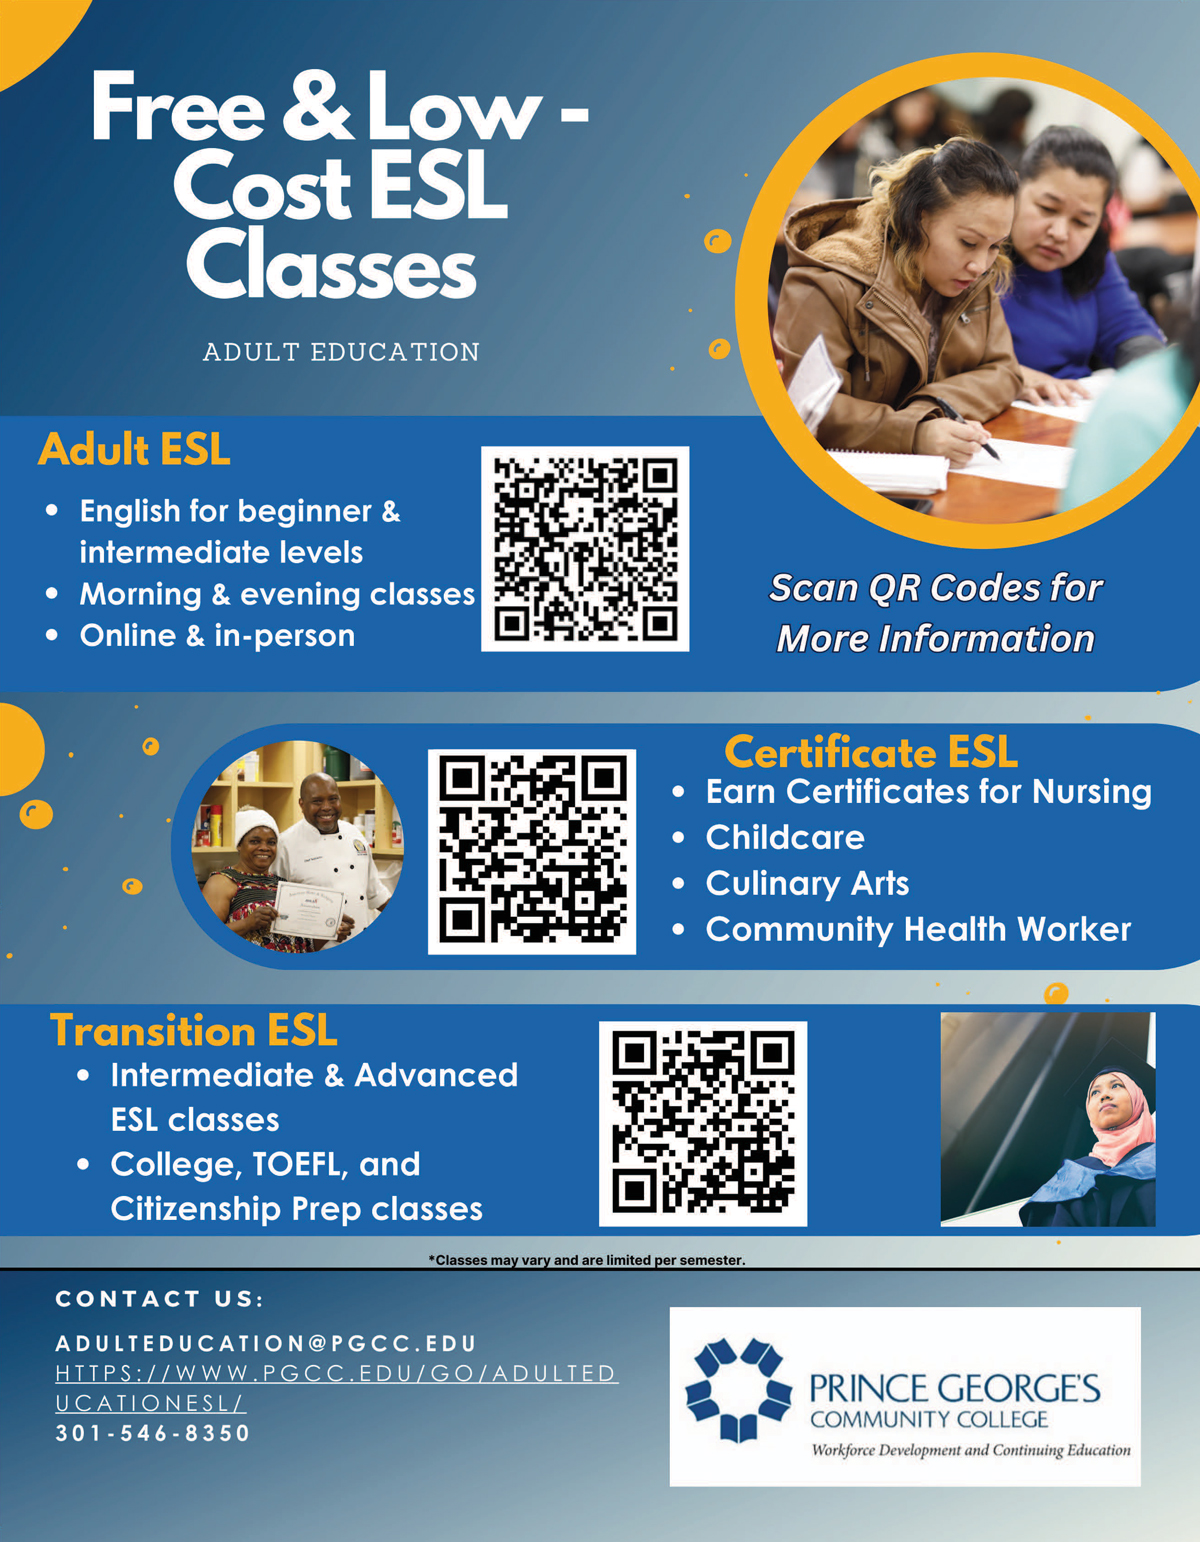 Free & Low Cost ESL Classes